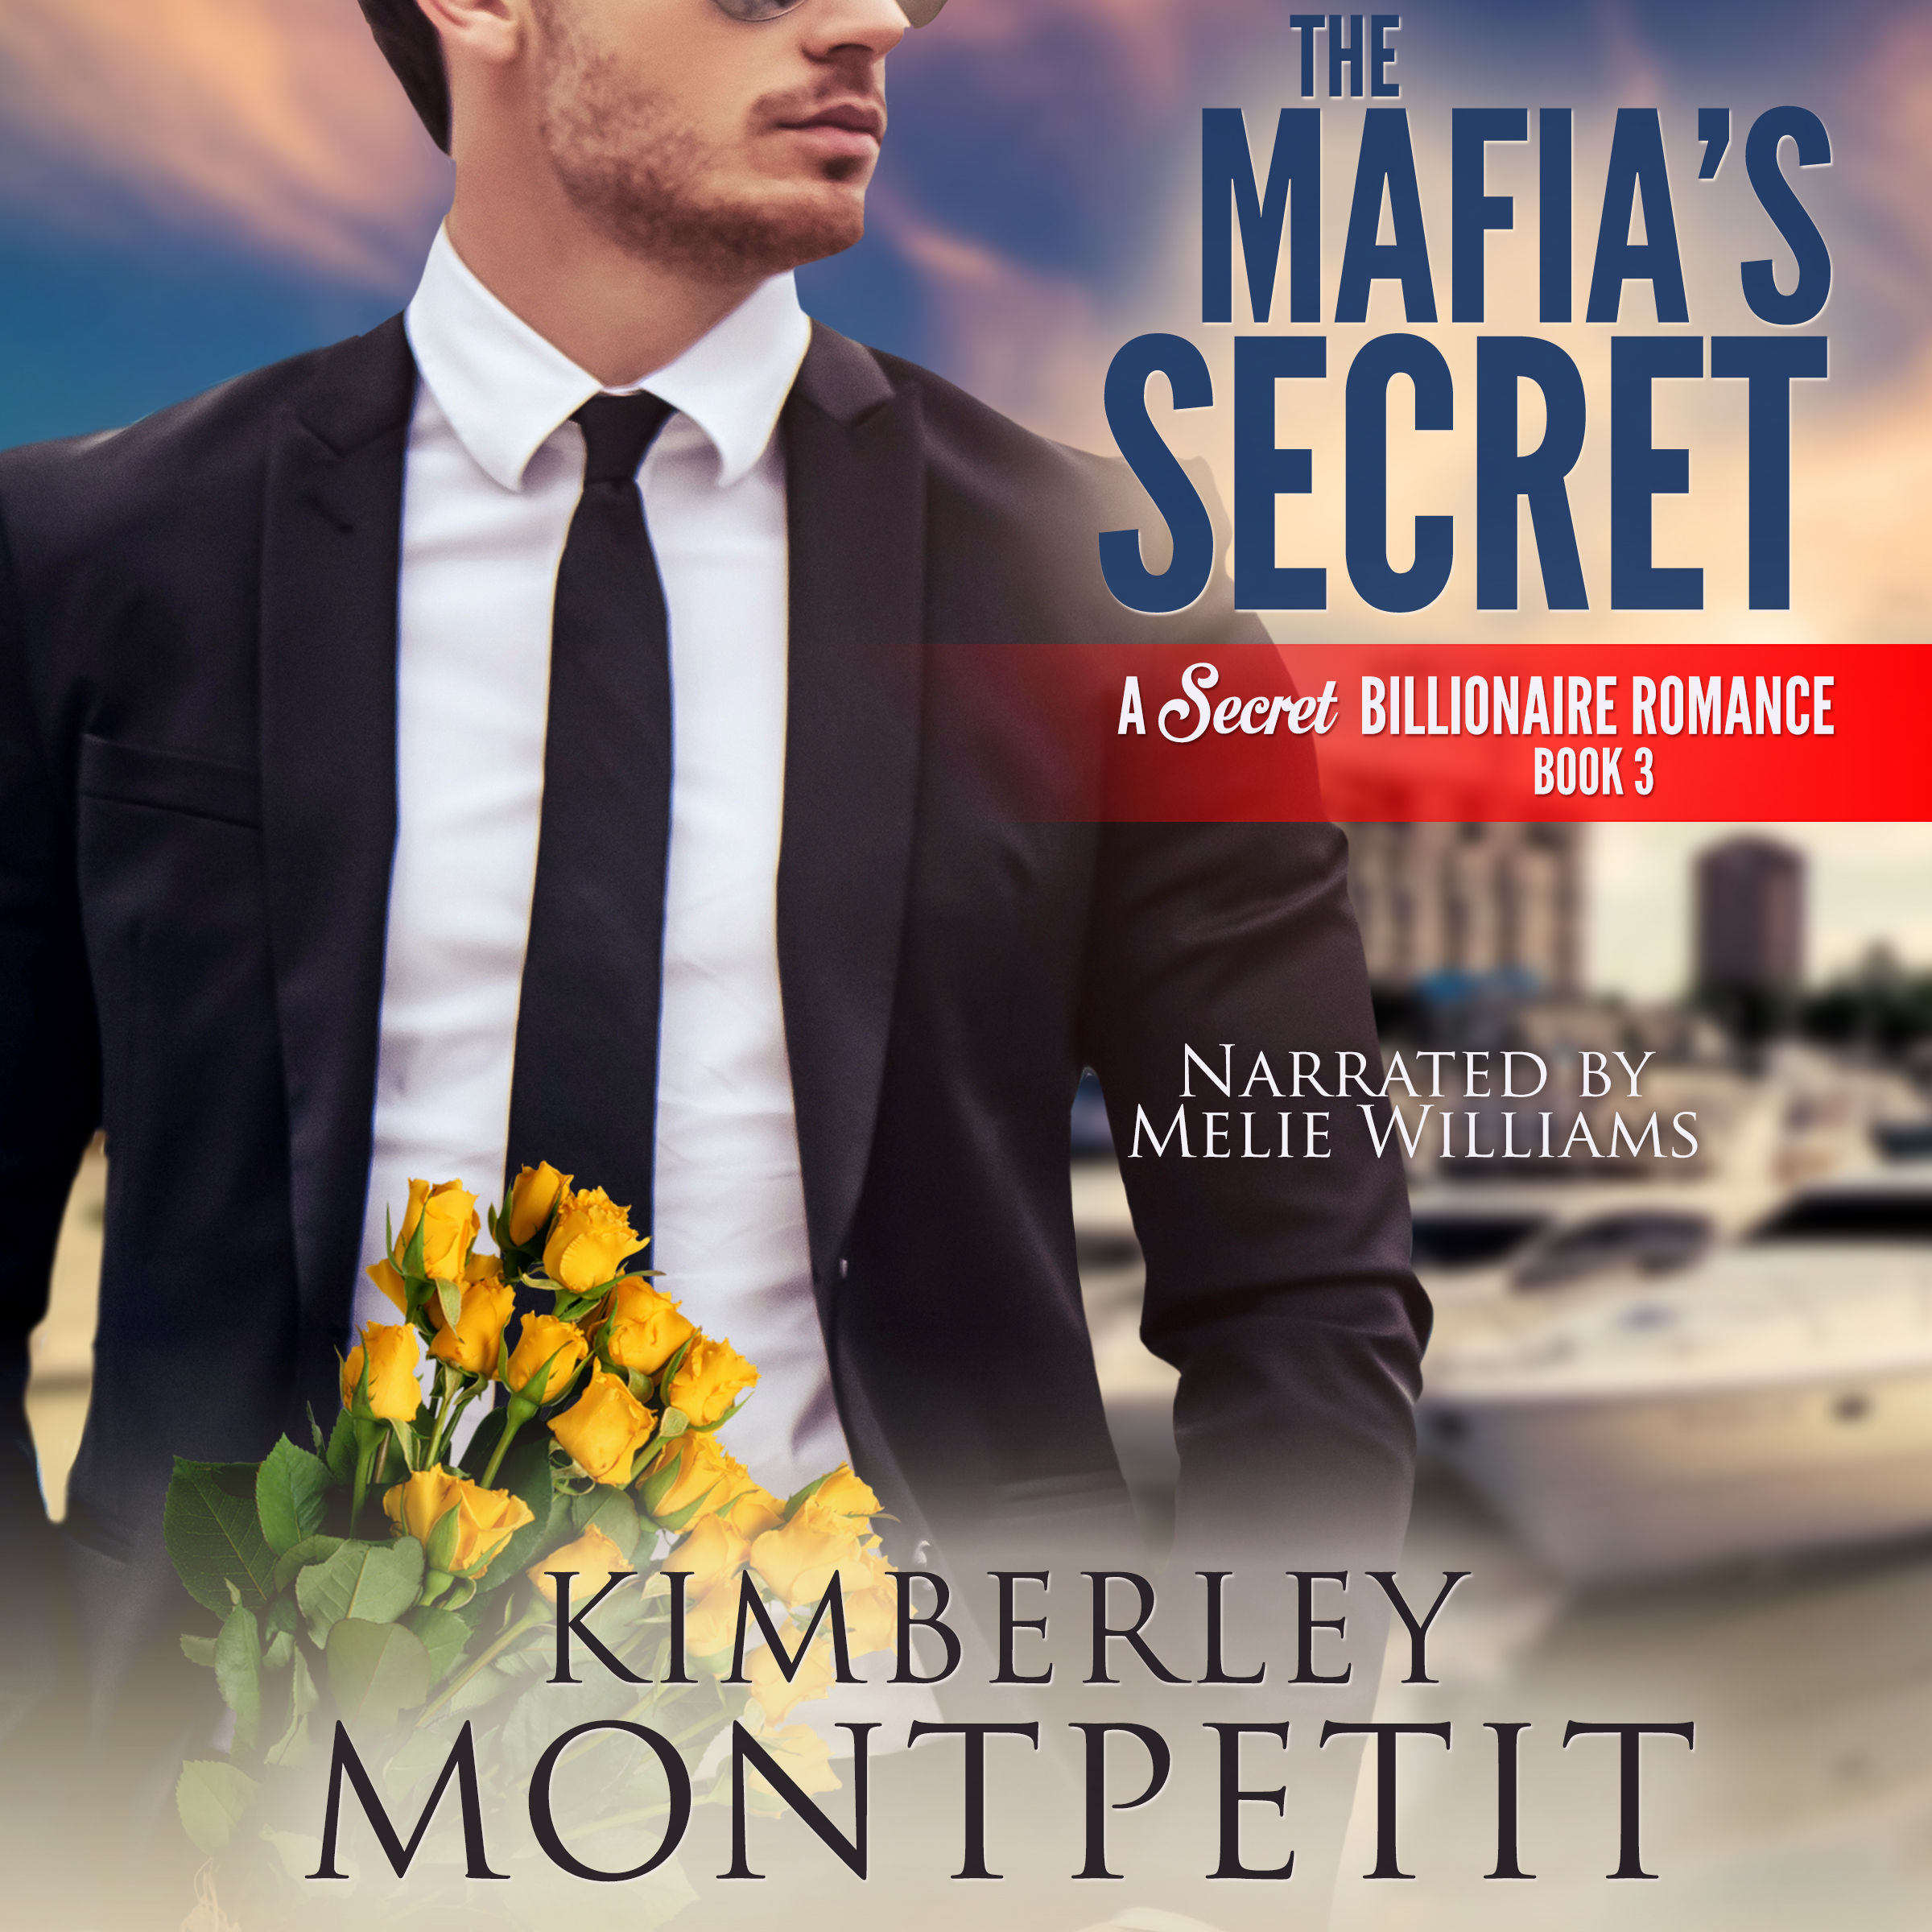 The Mafia's Secret